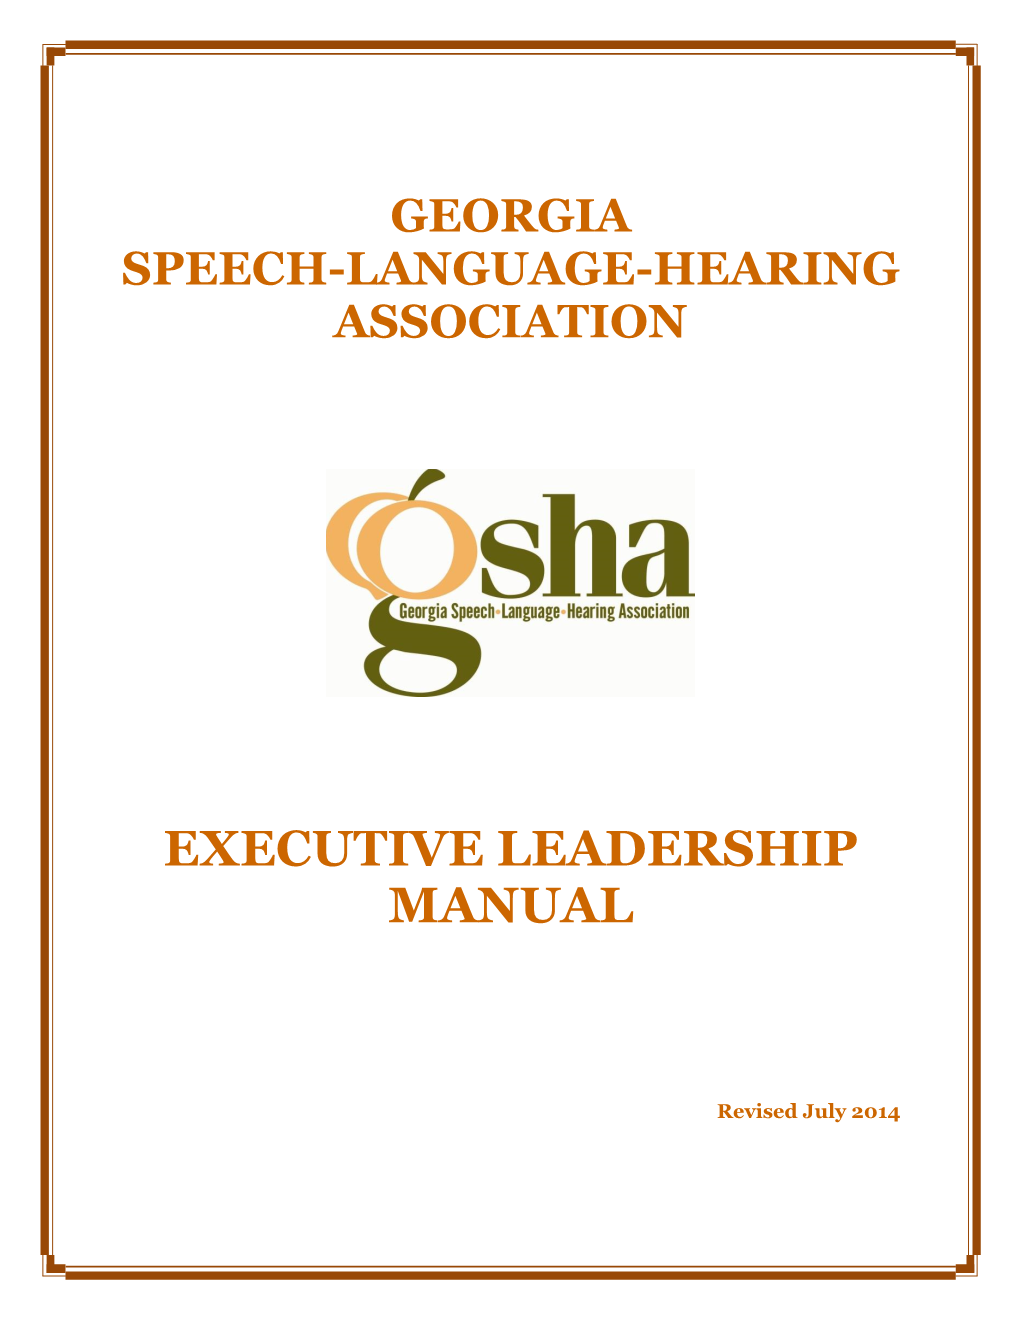 GSHA Executive Leadership Manual